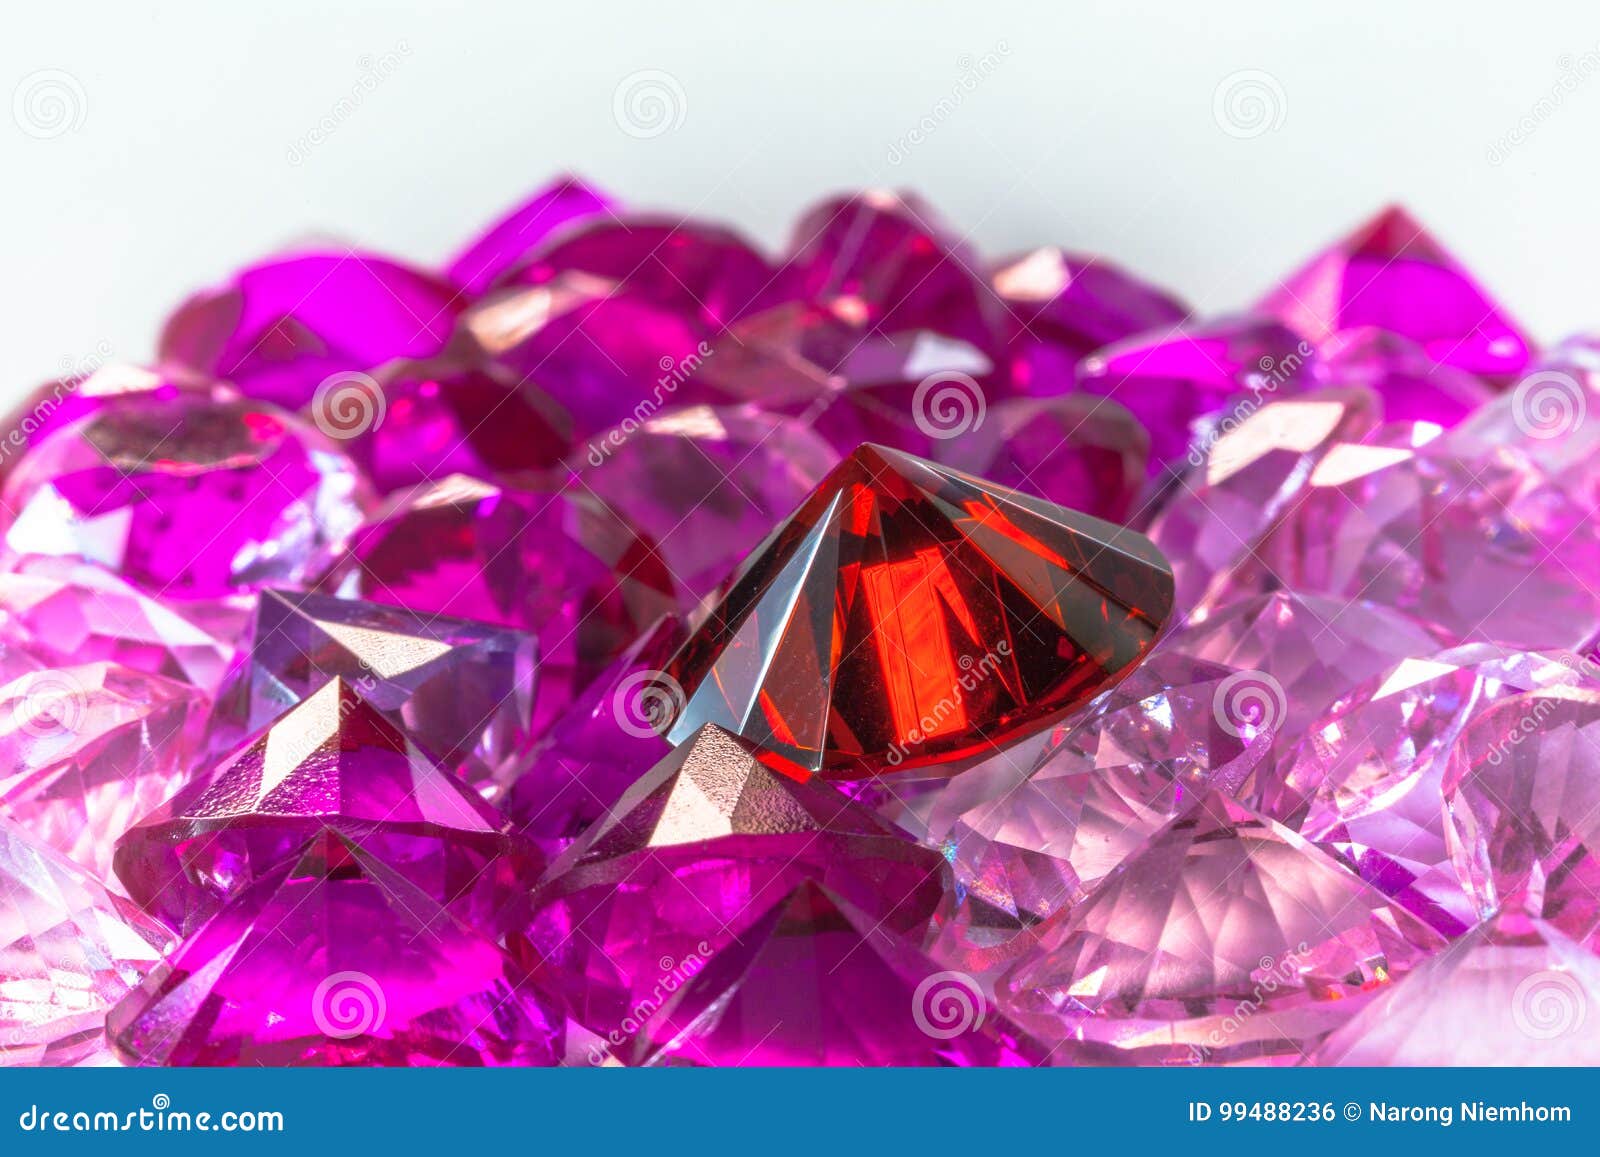 colorful gems on white background. light pendant shine on red diamond. tourmaline pink diamonds around smokey ruby red gemstone.